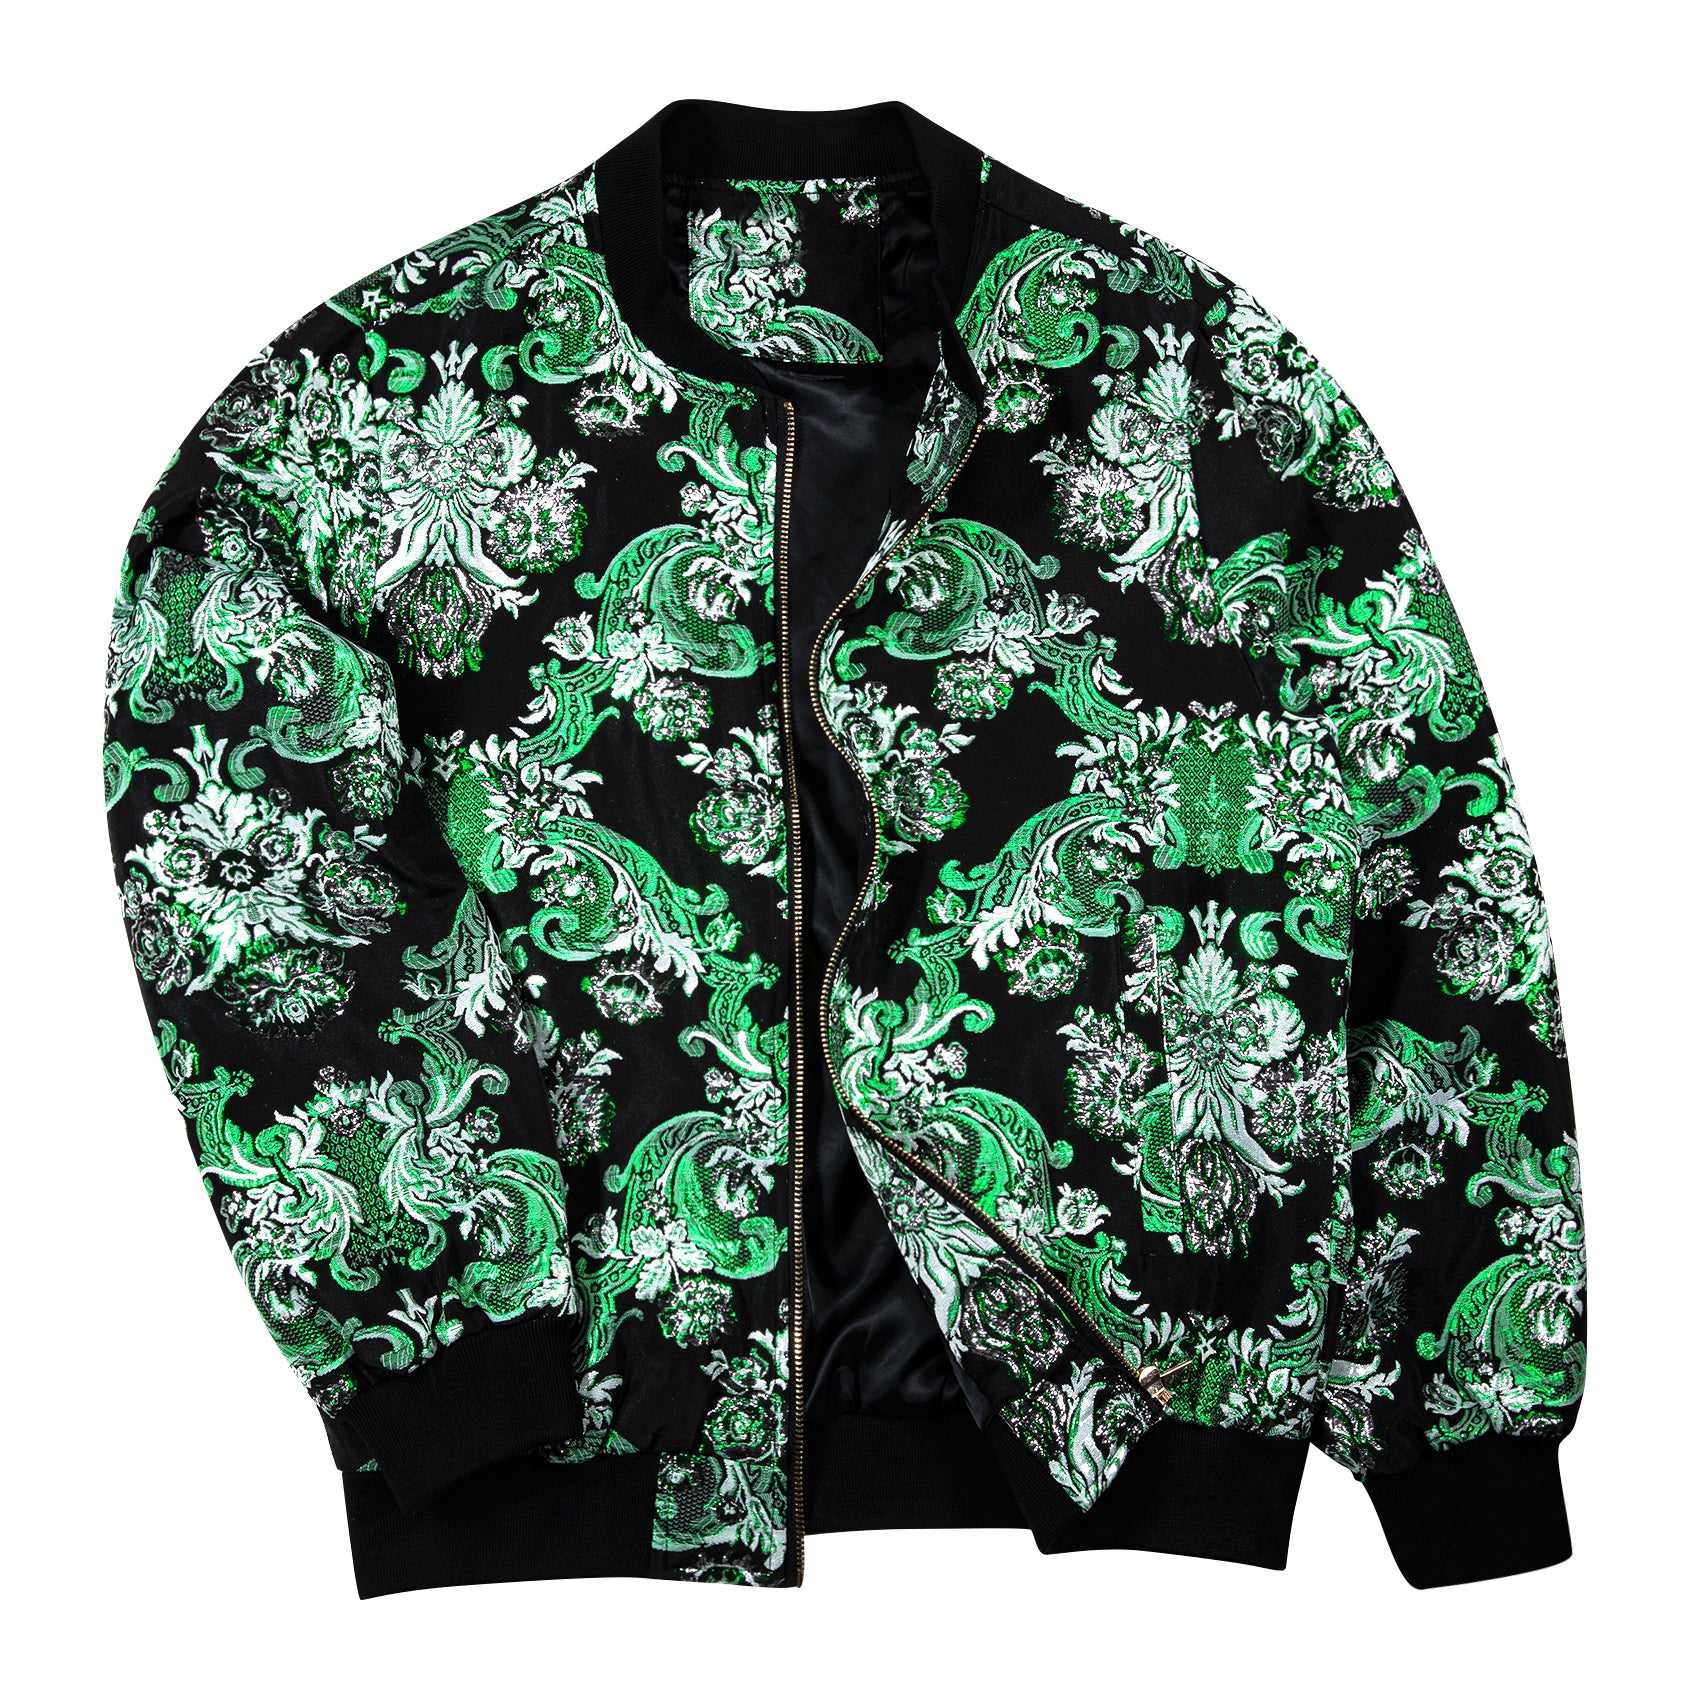 Mens Green White Floral Jacquard Paisley Jacket